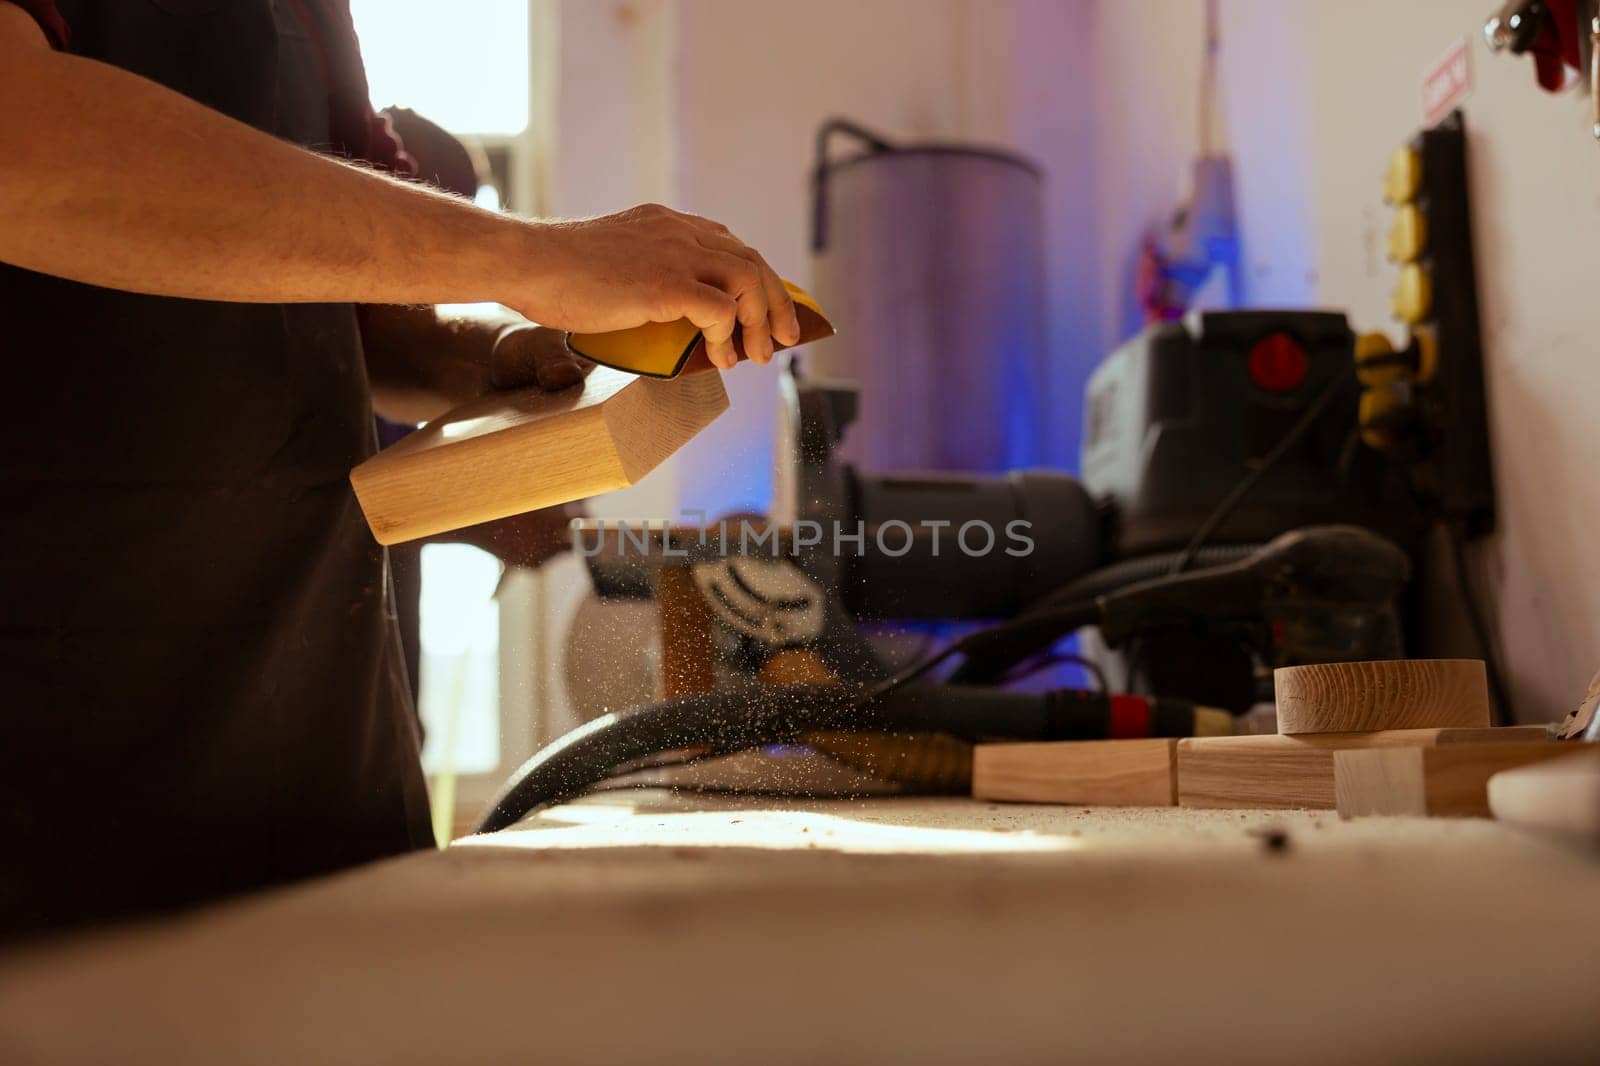 Artisan in studio using sandpaper for smoothing wooden surface, creating wood art designs, enjoying diy hobby. Man using sanding sheets to refurbish damages suffered by timber block, close up shot